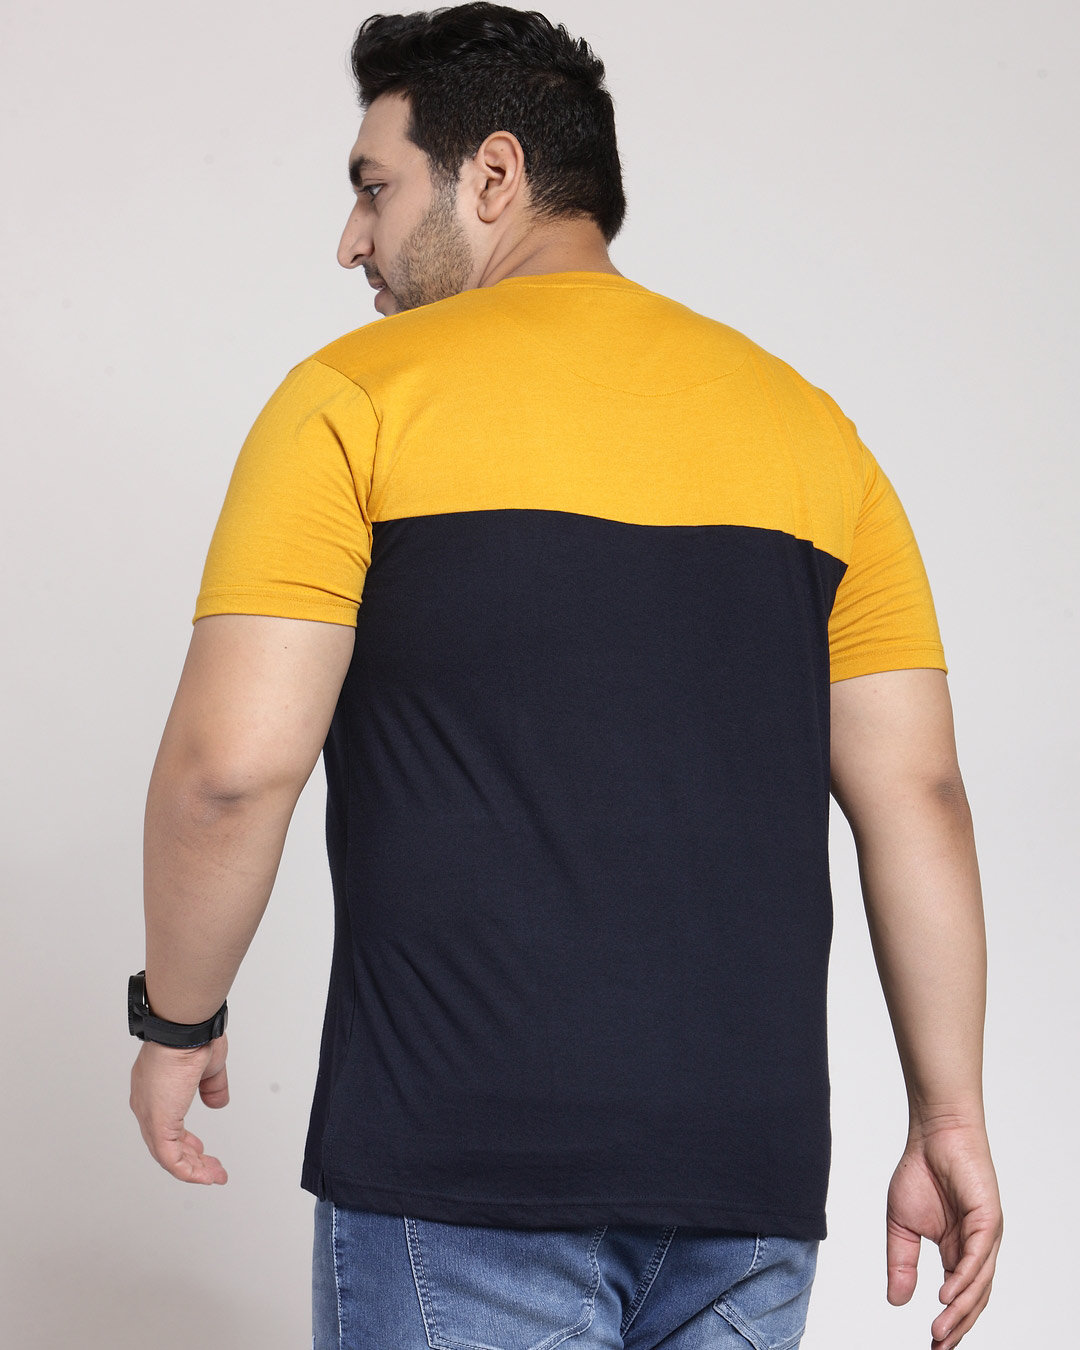 Shop PlusS Men's T-Shirt Half Sleeves-Back